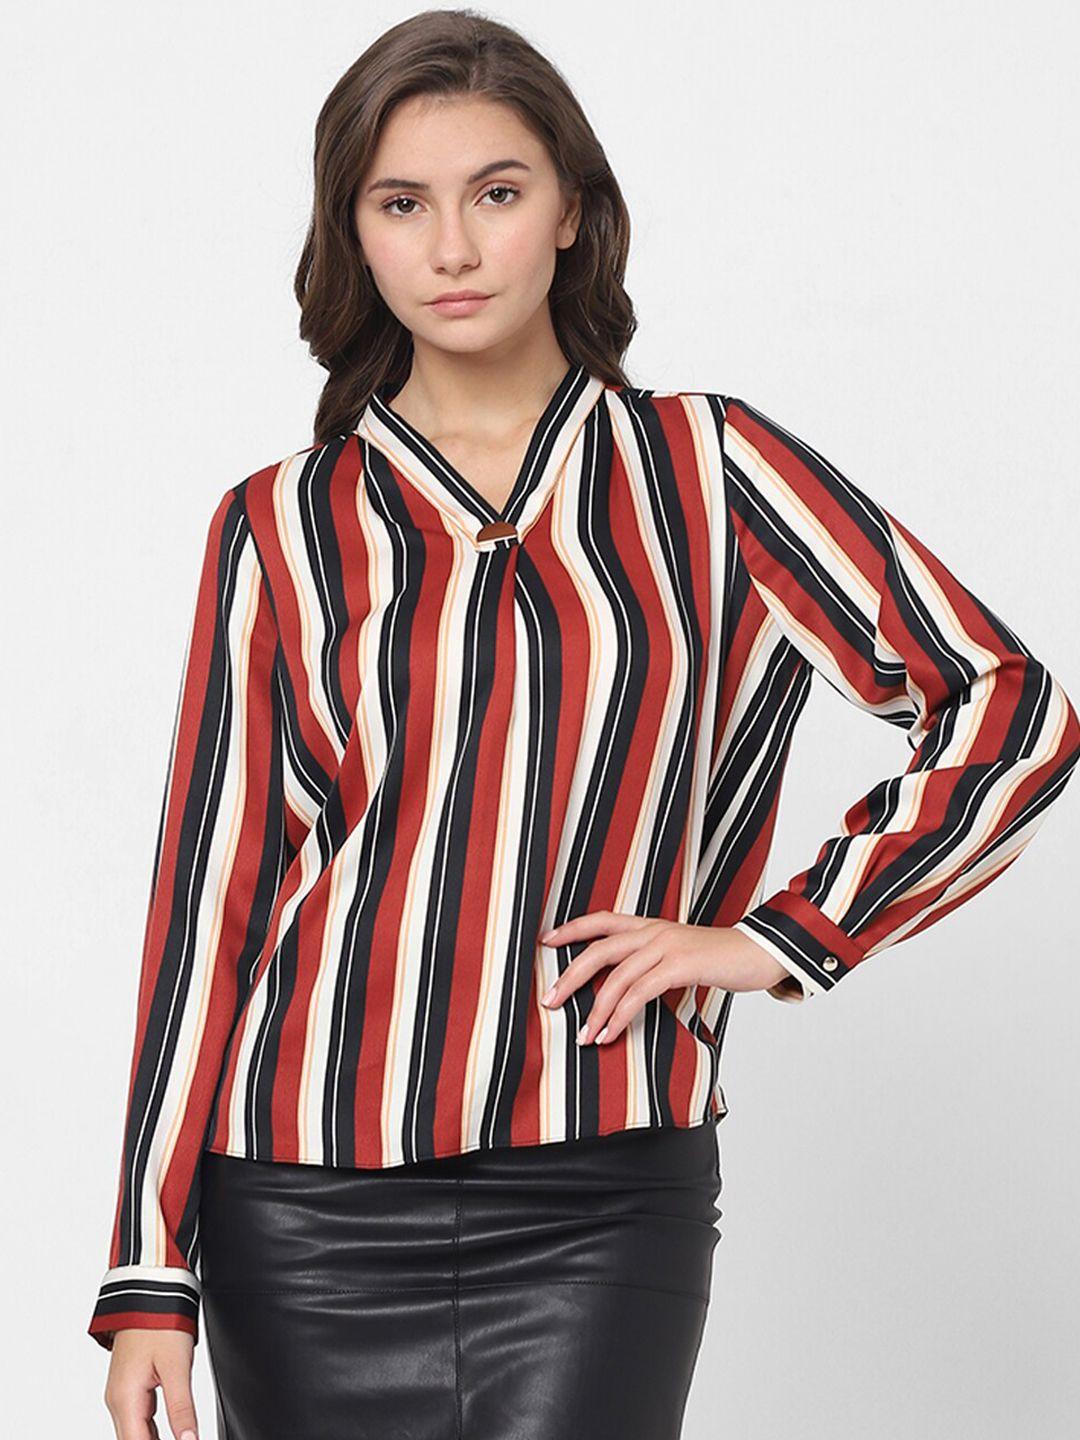 vero moda striped shirt style top